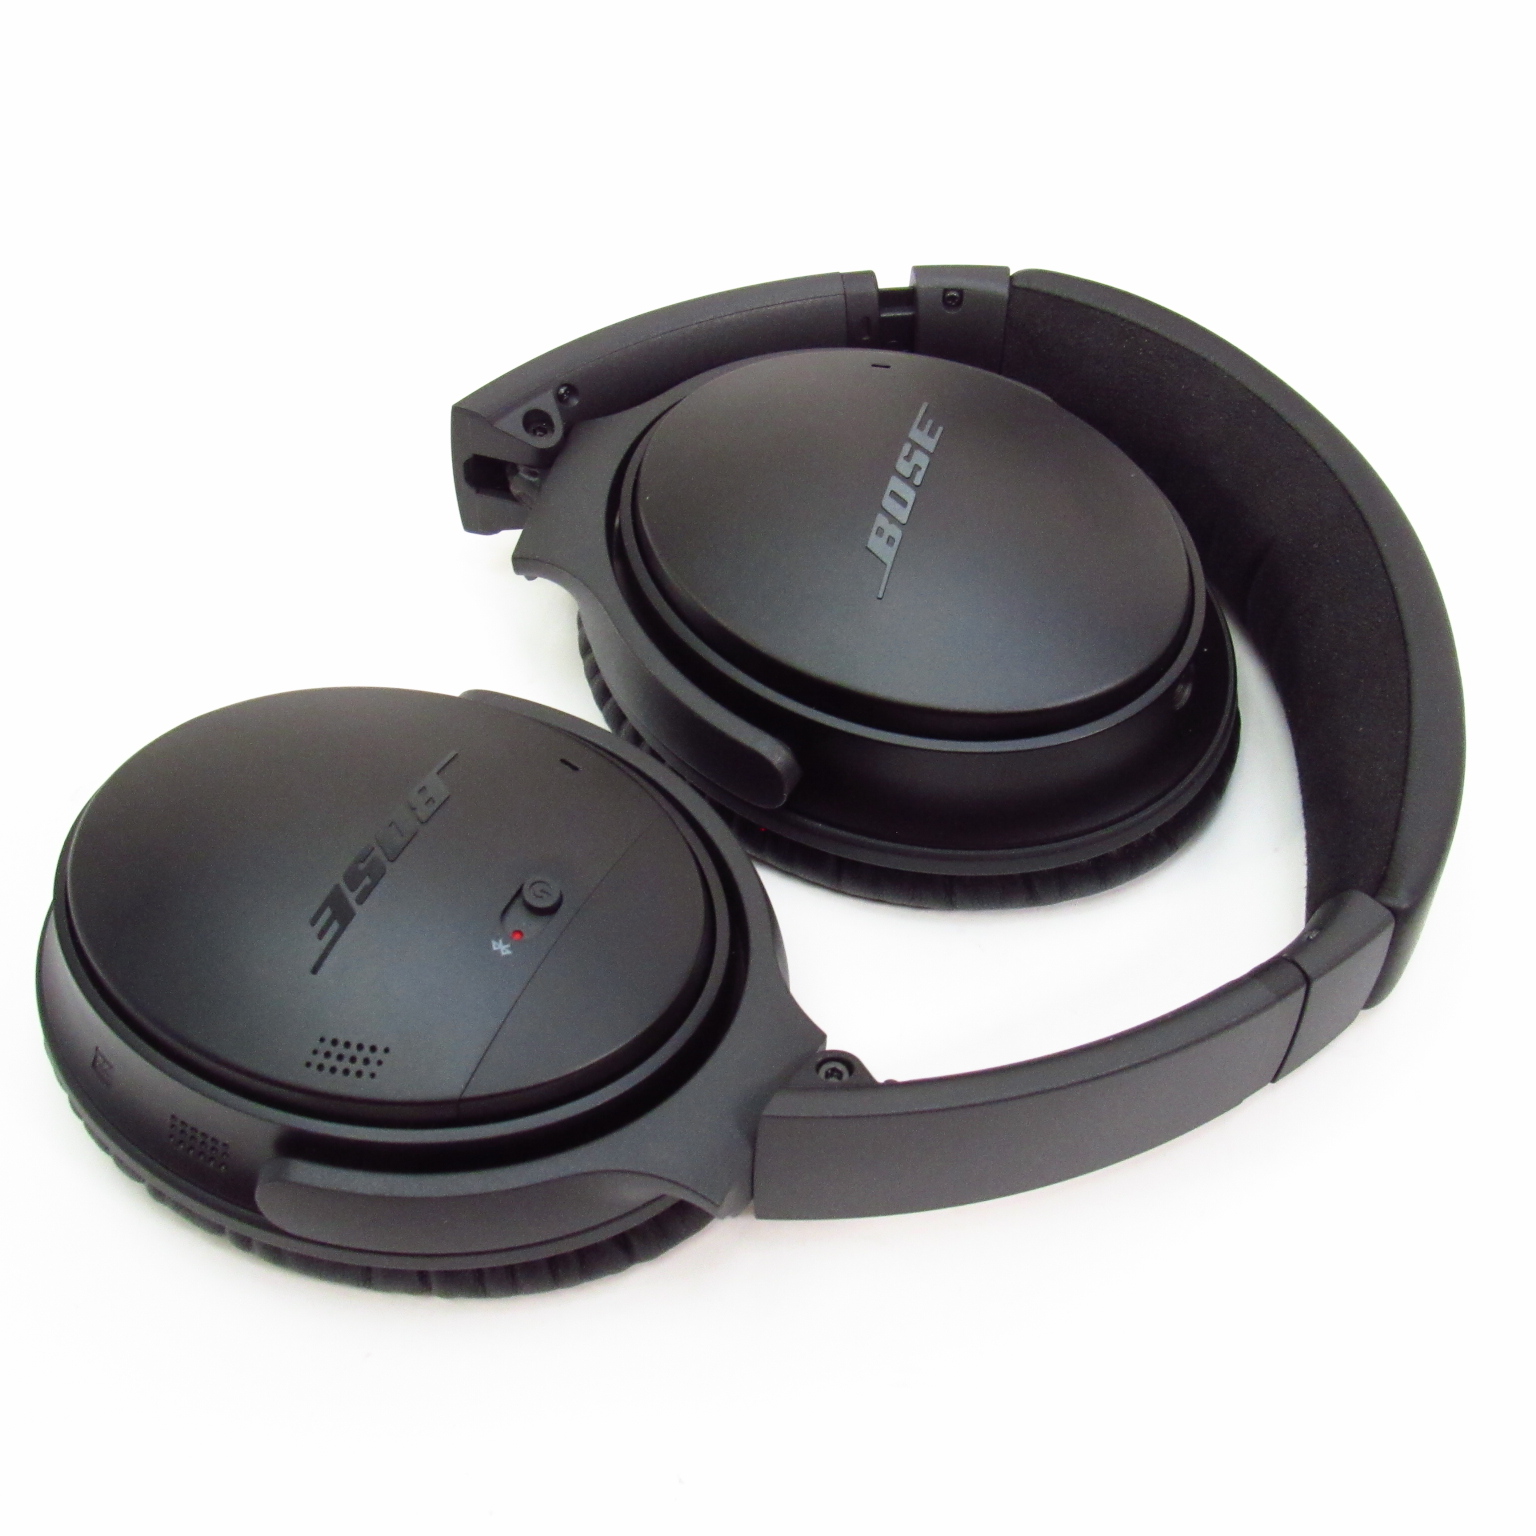 Bose QuietComfort 35 II Noise-Cancelling Bluetooth Over-Ear Headphones